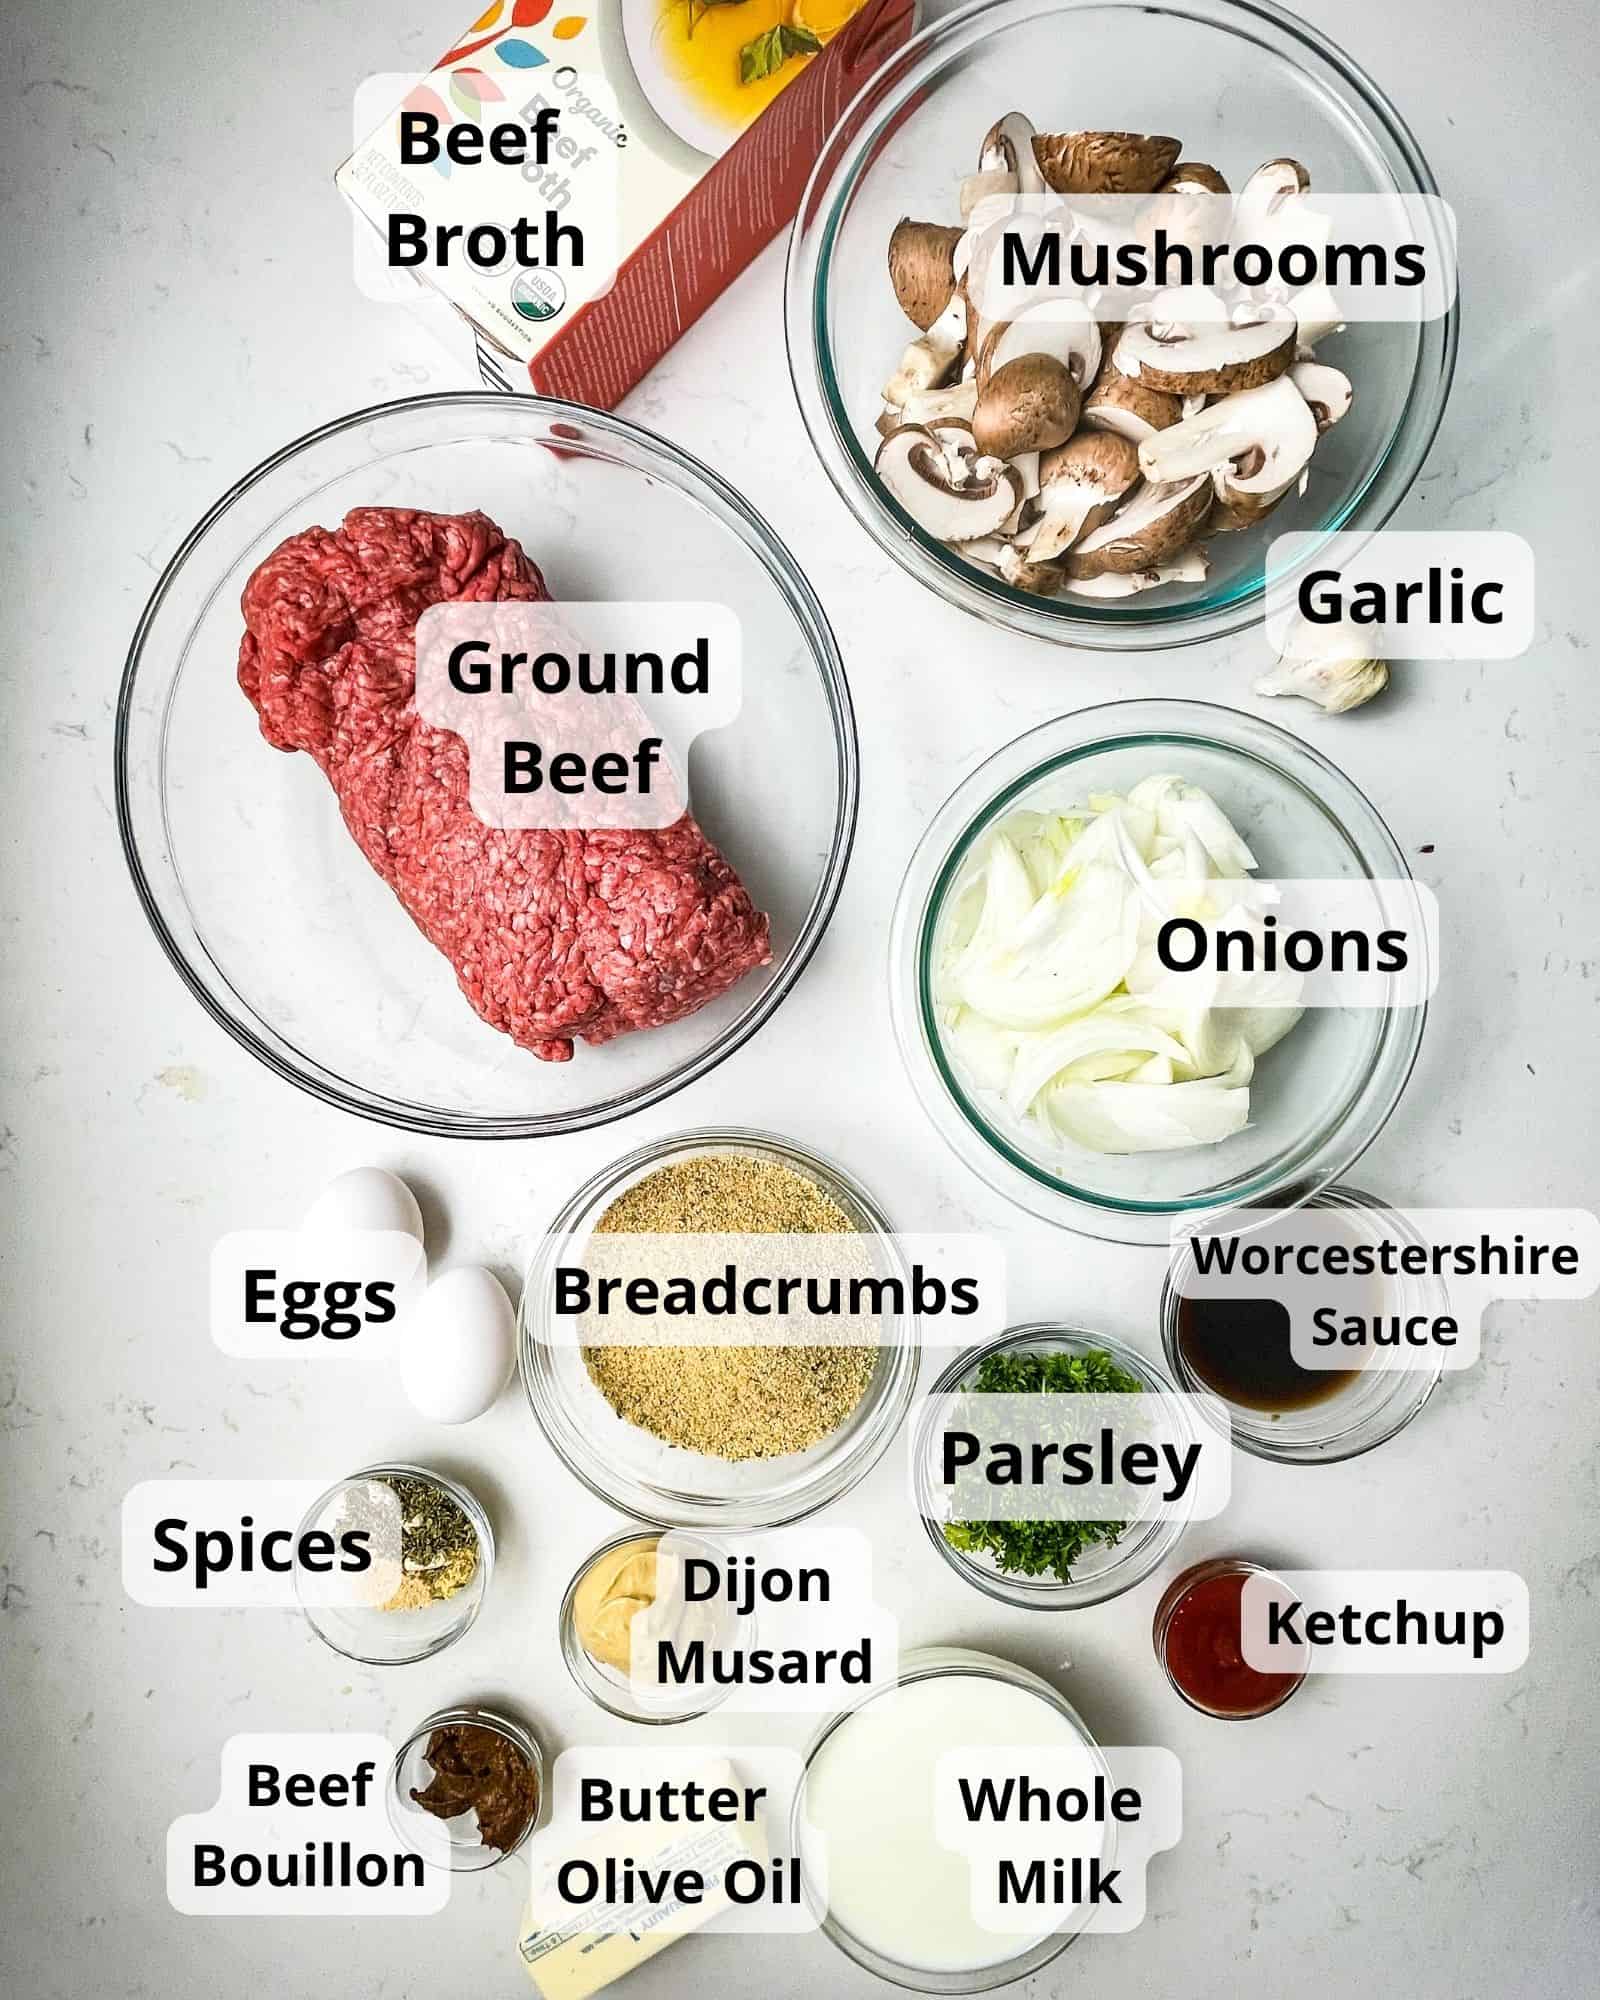 ingredients to make salisbury steak - beef, breadcrumbs, milk, seasonings, garlic, onions, ketchup, worcestershire sauce, parsley, eggs, dijon mustard, thyme, beef broth, flour, and better than bouillon.